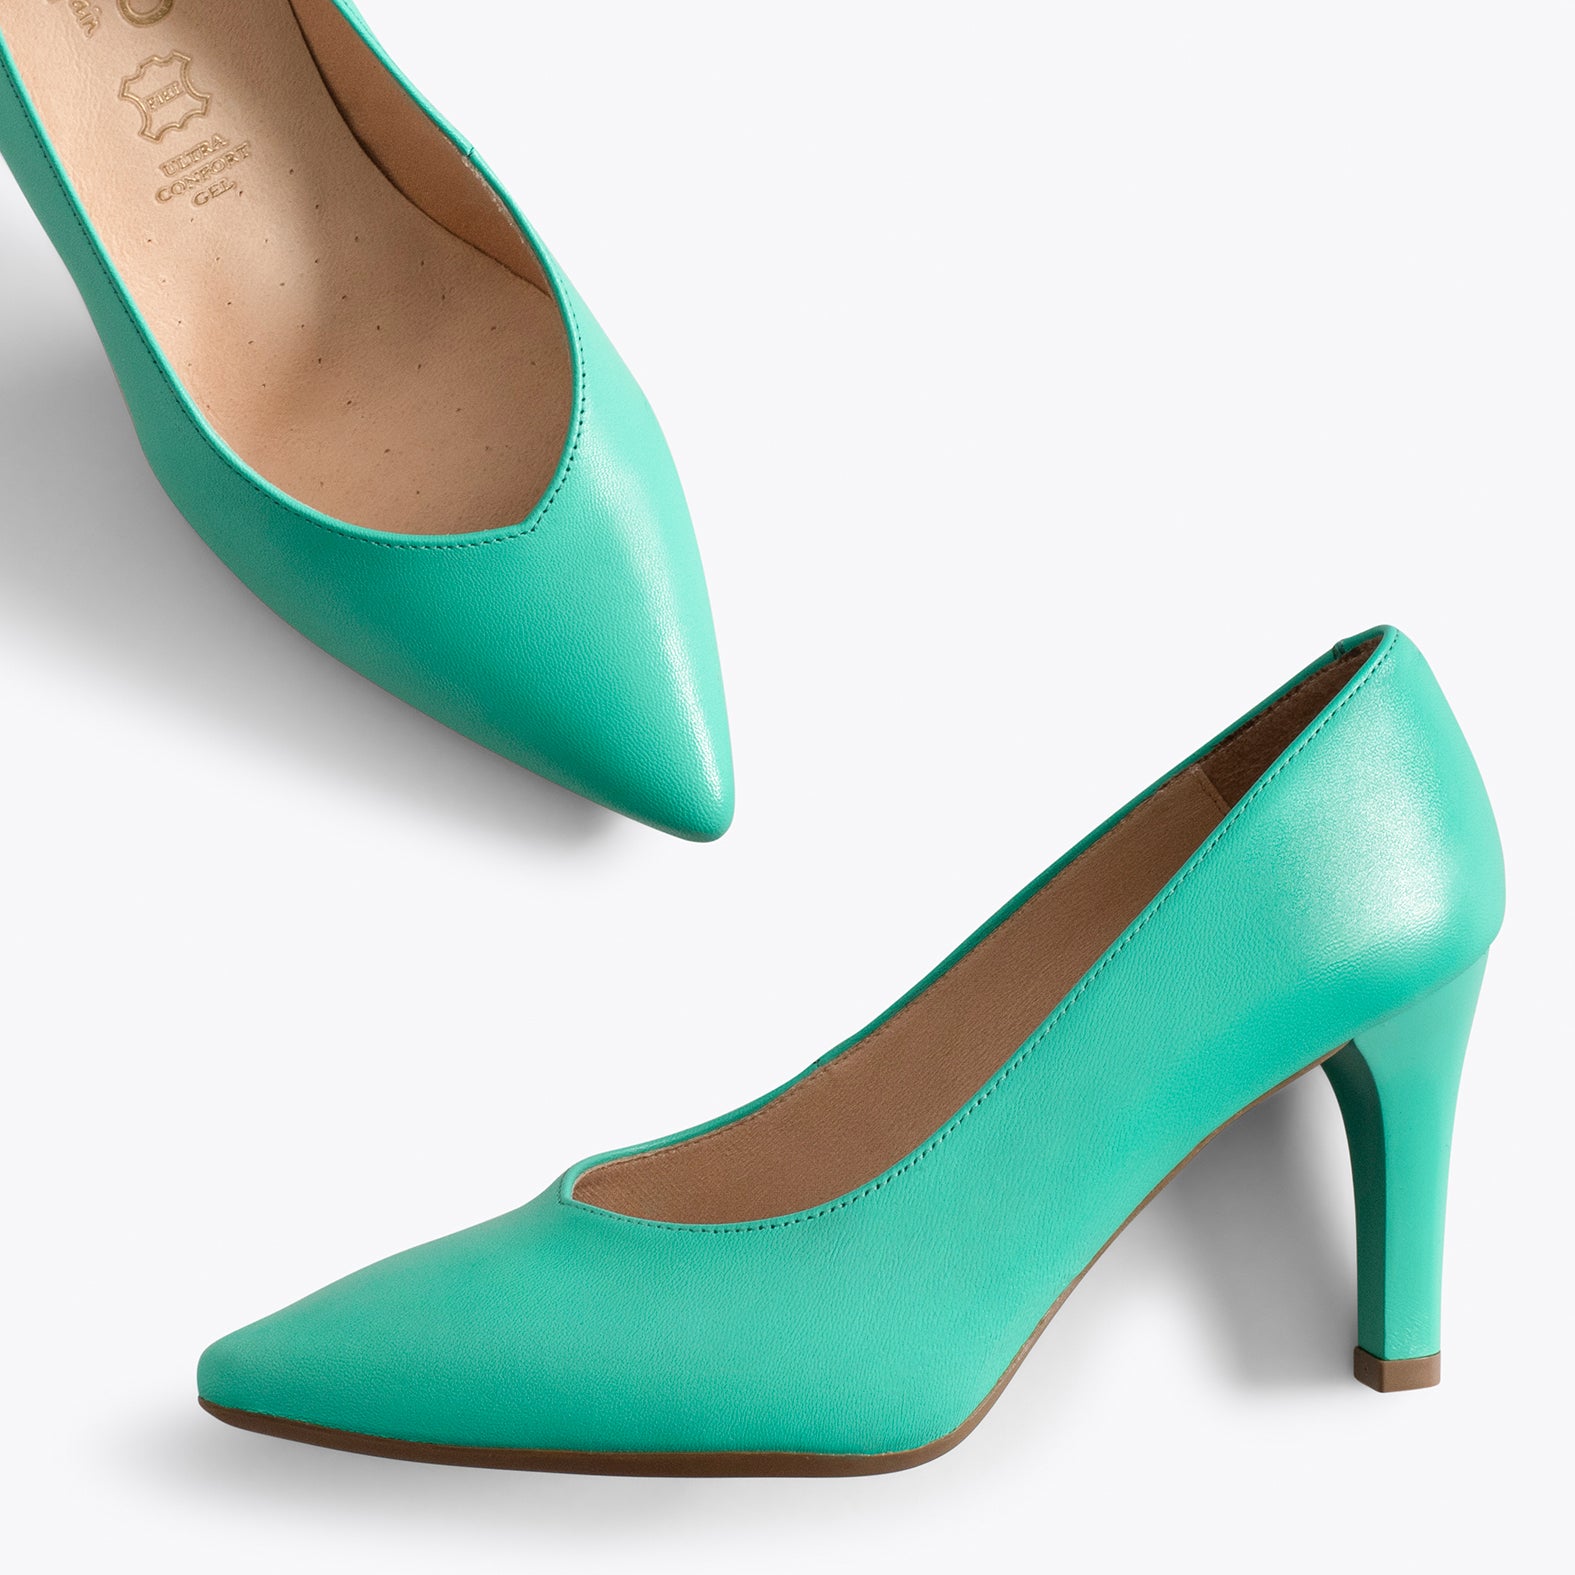 GLAM – TURQUOISE elegant high heels